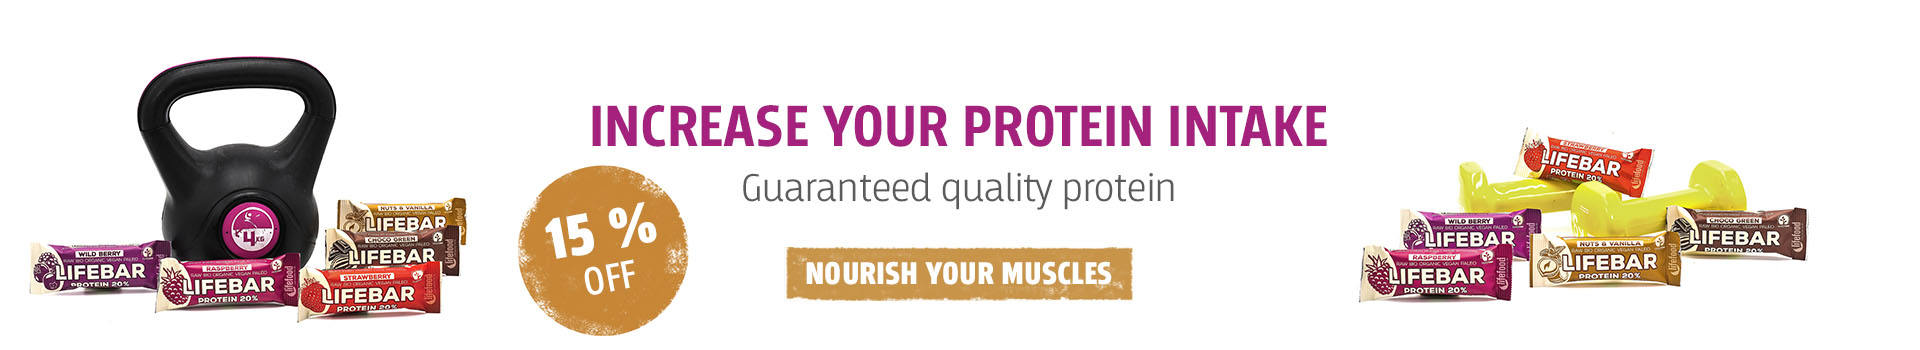 Lifebar protein